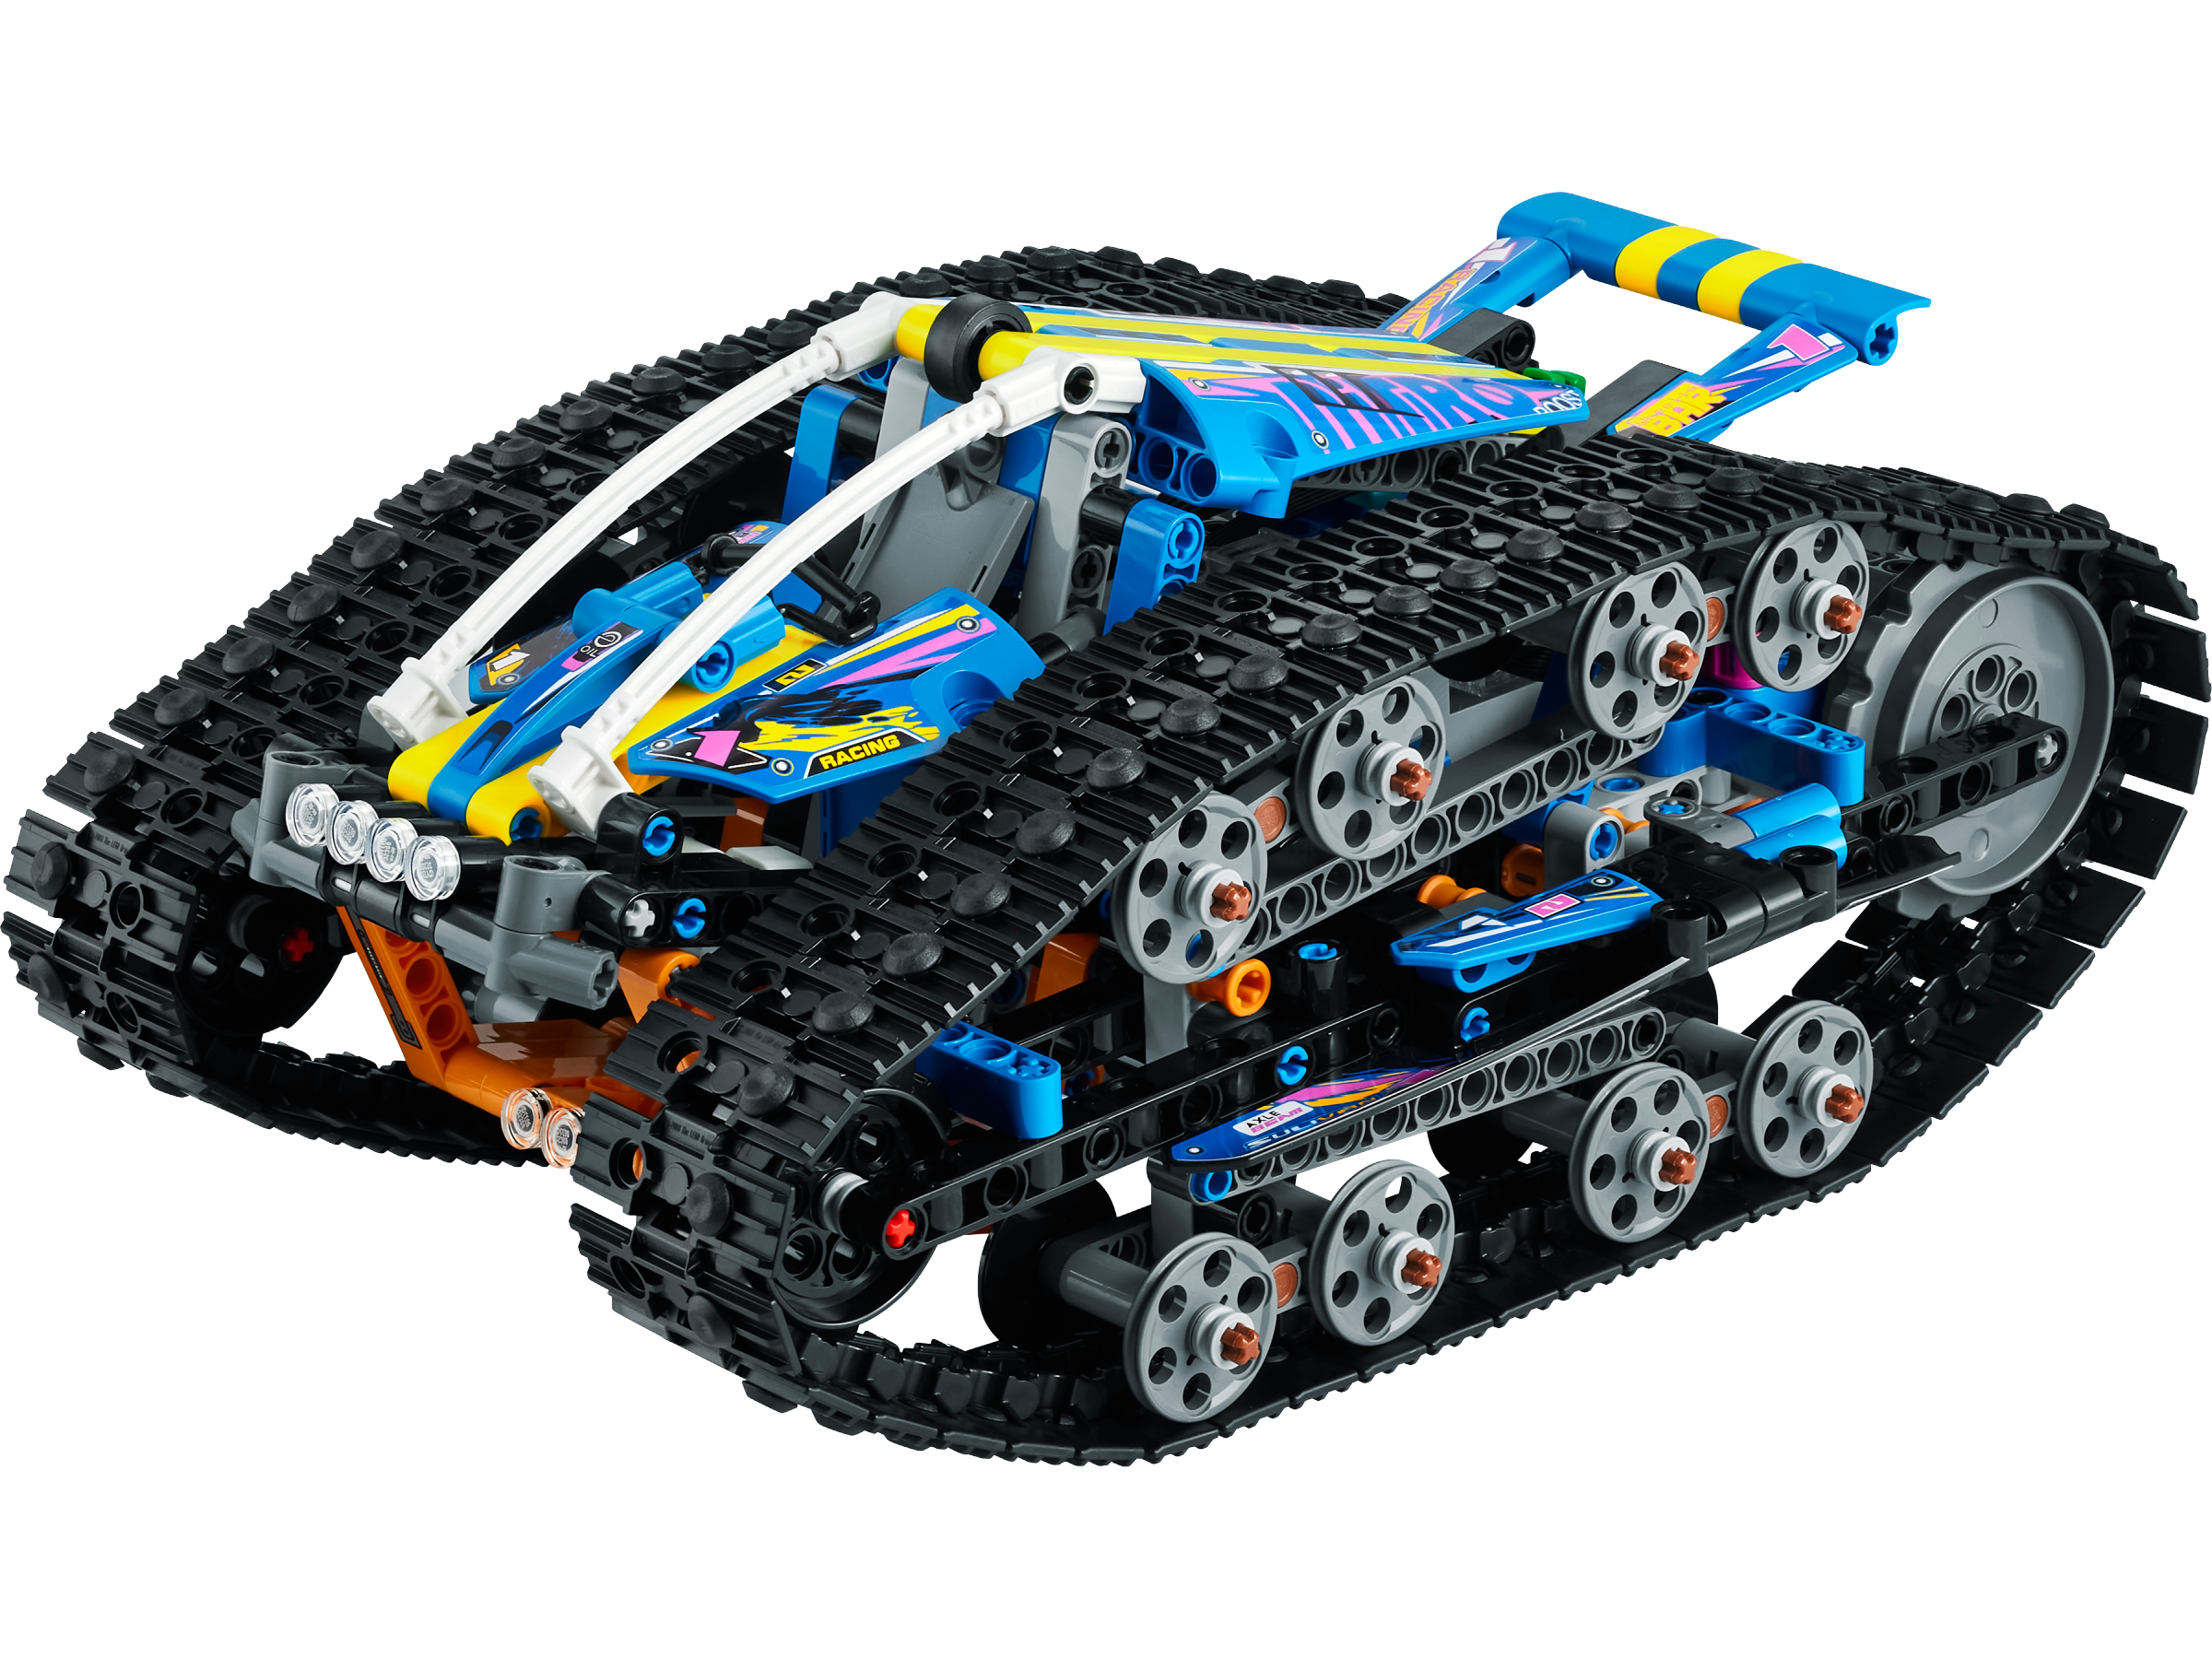 orange sjæl Berygtet App-Controlled Transformation Vehicle 42140 | Technic™ | Buy online at the  Official LEGO® Shop US